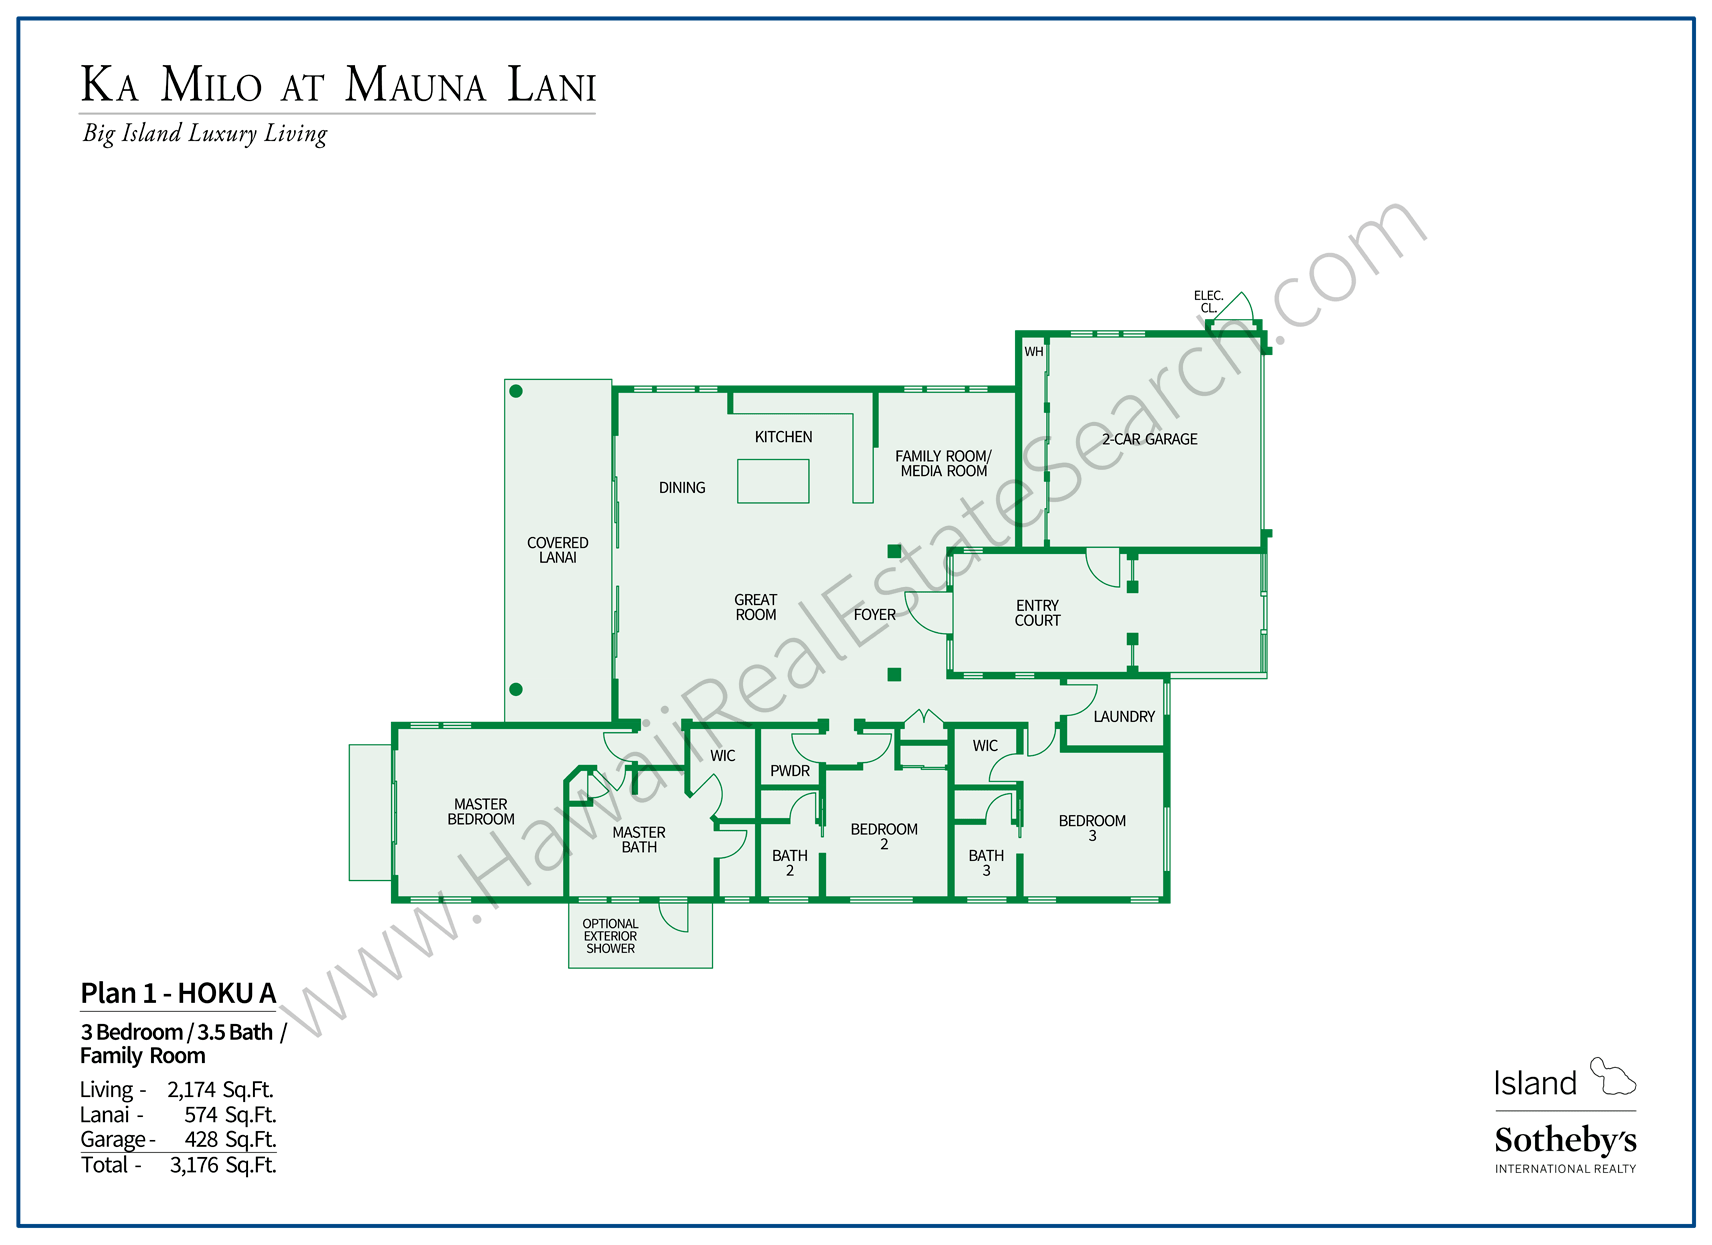 Ka Milo at Mauna Lani Floor Plan